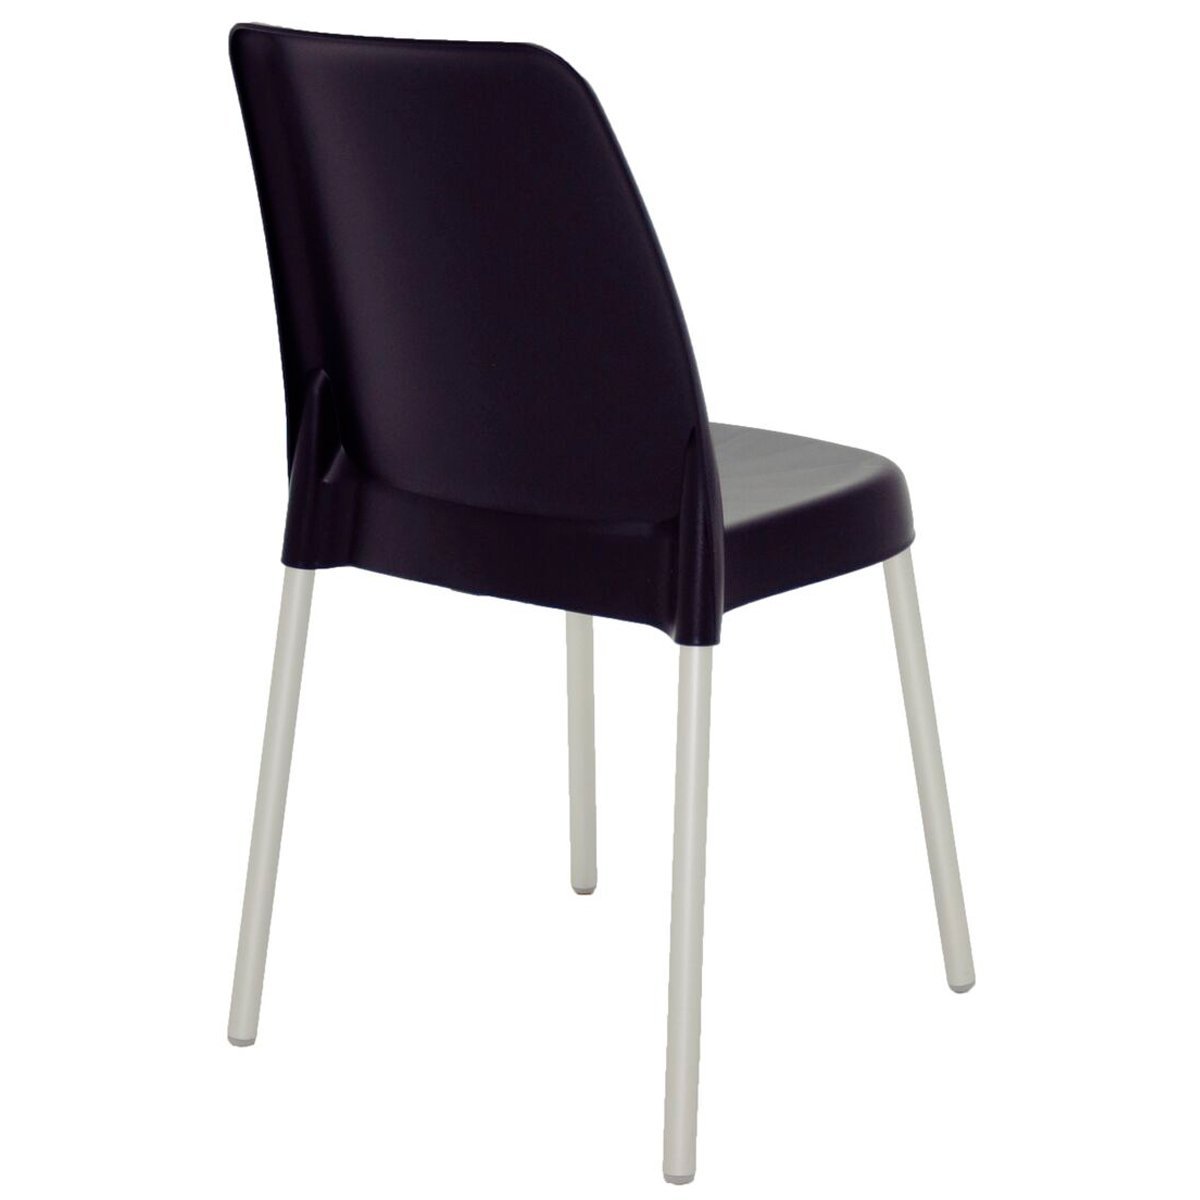 Conjunto 4 Cadeiras Plástica Vanda com Pernas de Alumínio Anodizadas- Tramontina - Preto 92053/909 - 6